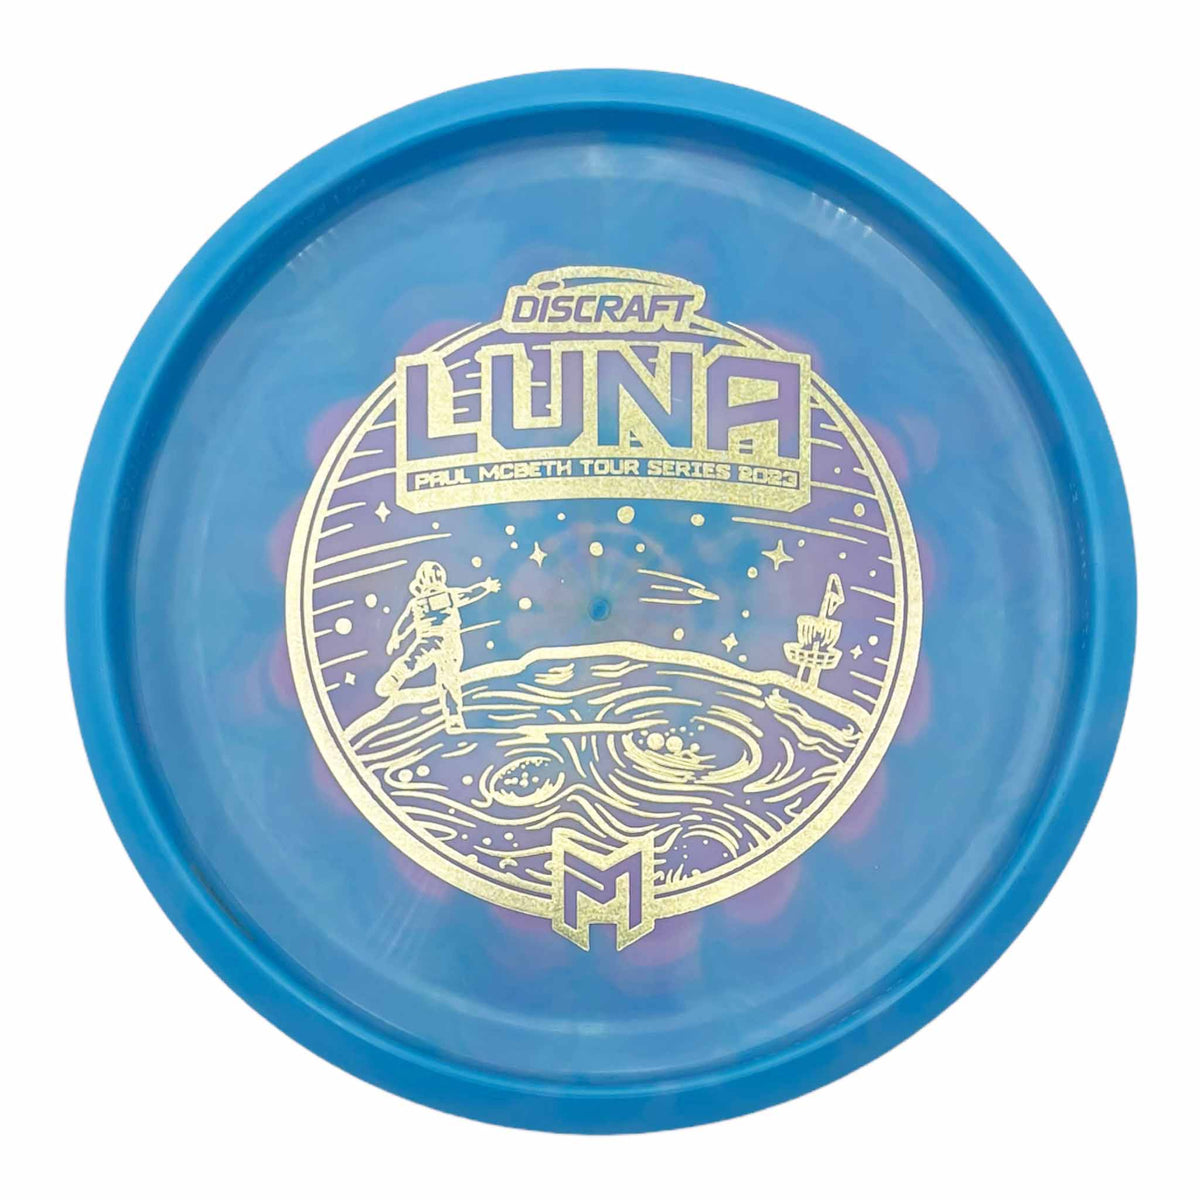 Discraft 2023 Paul McBeth Tour Series Luna putter and approach - Blue / Gold